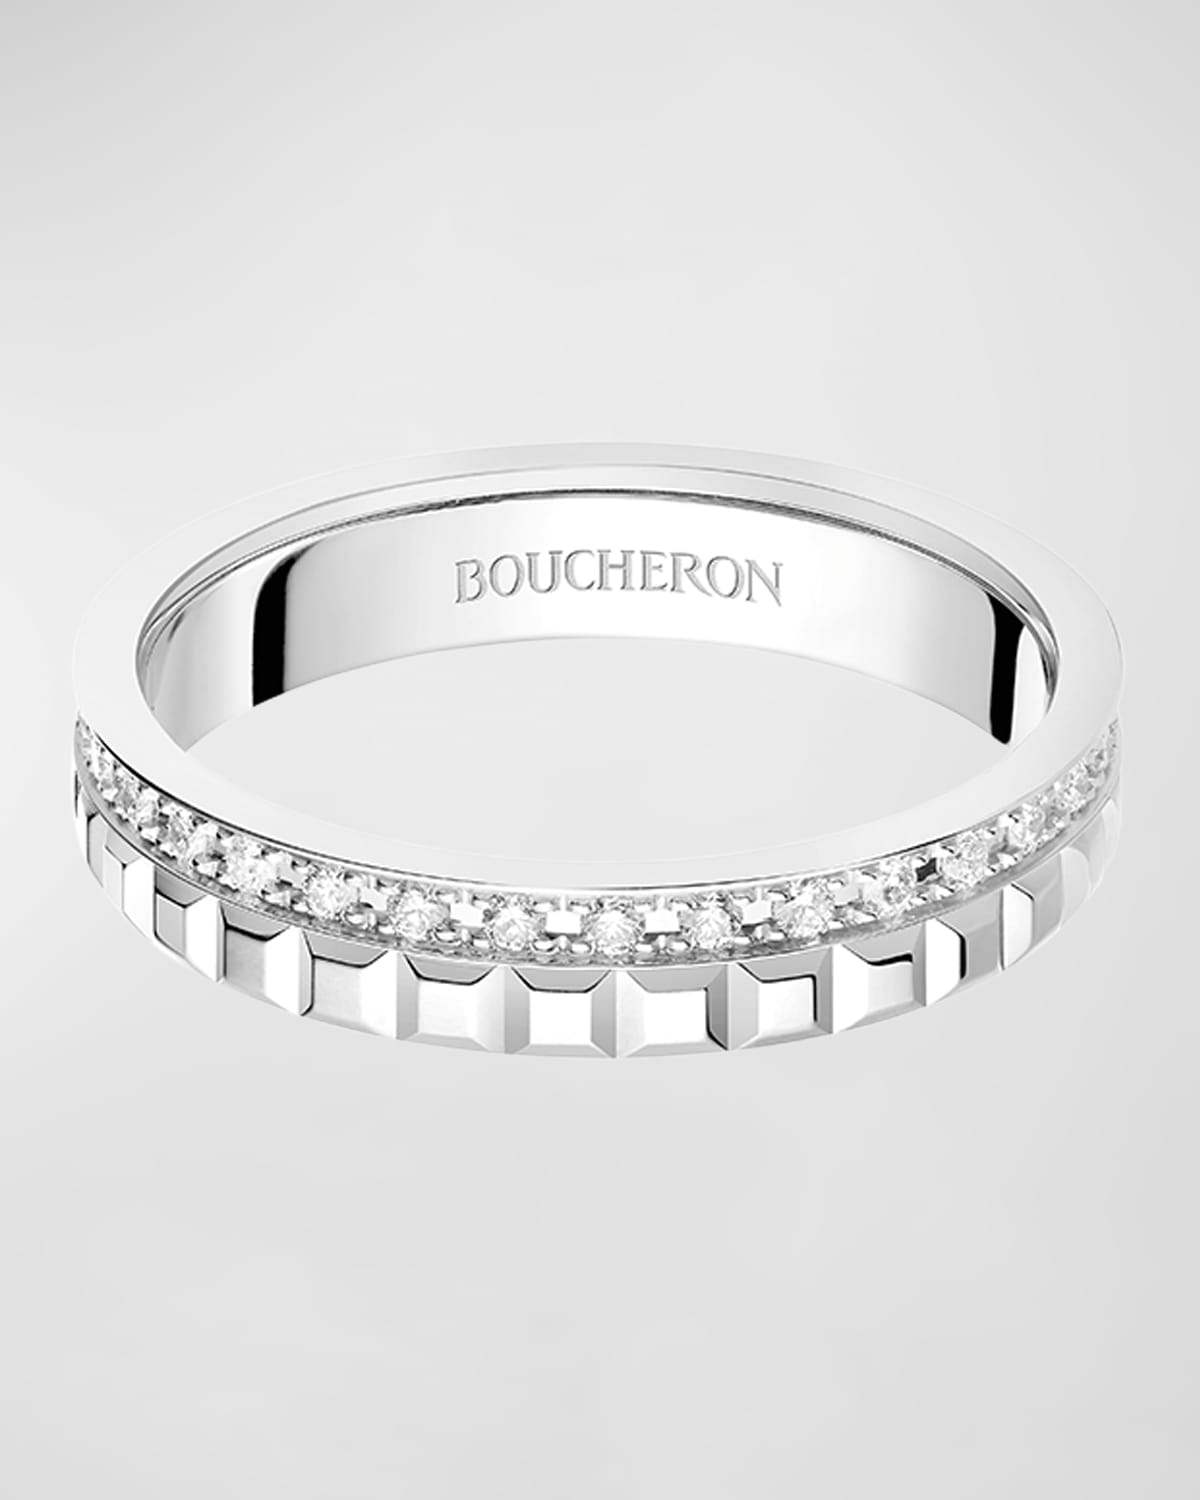 Boucheron White Gold Quatre Diamond Ring, Size 62